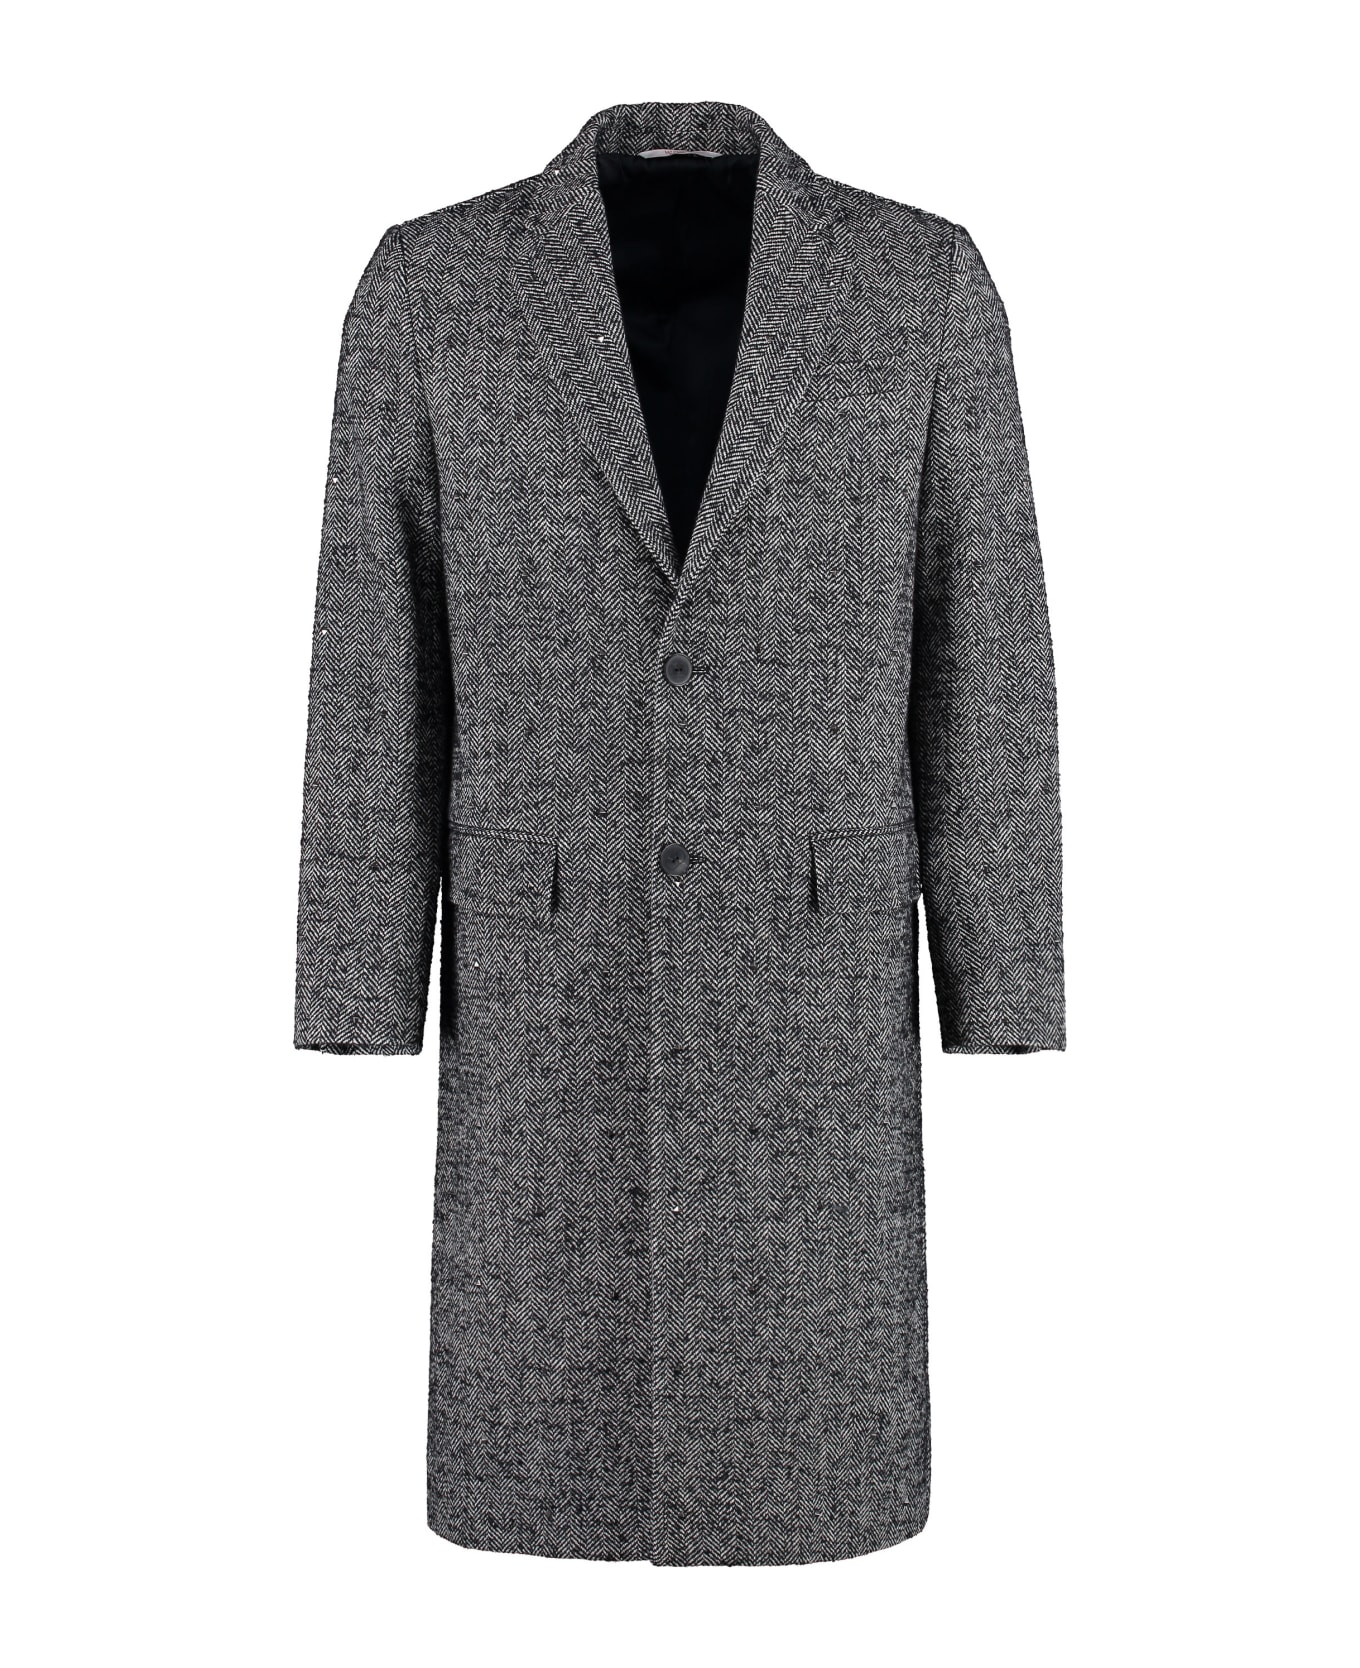 Valentino Mixed Wool Tweed Coat - black